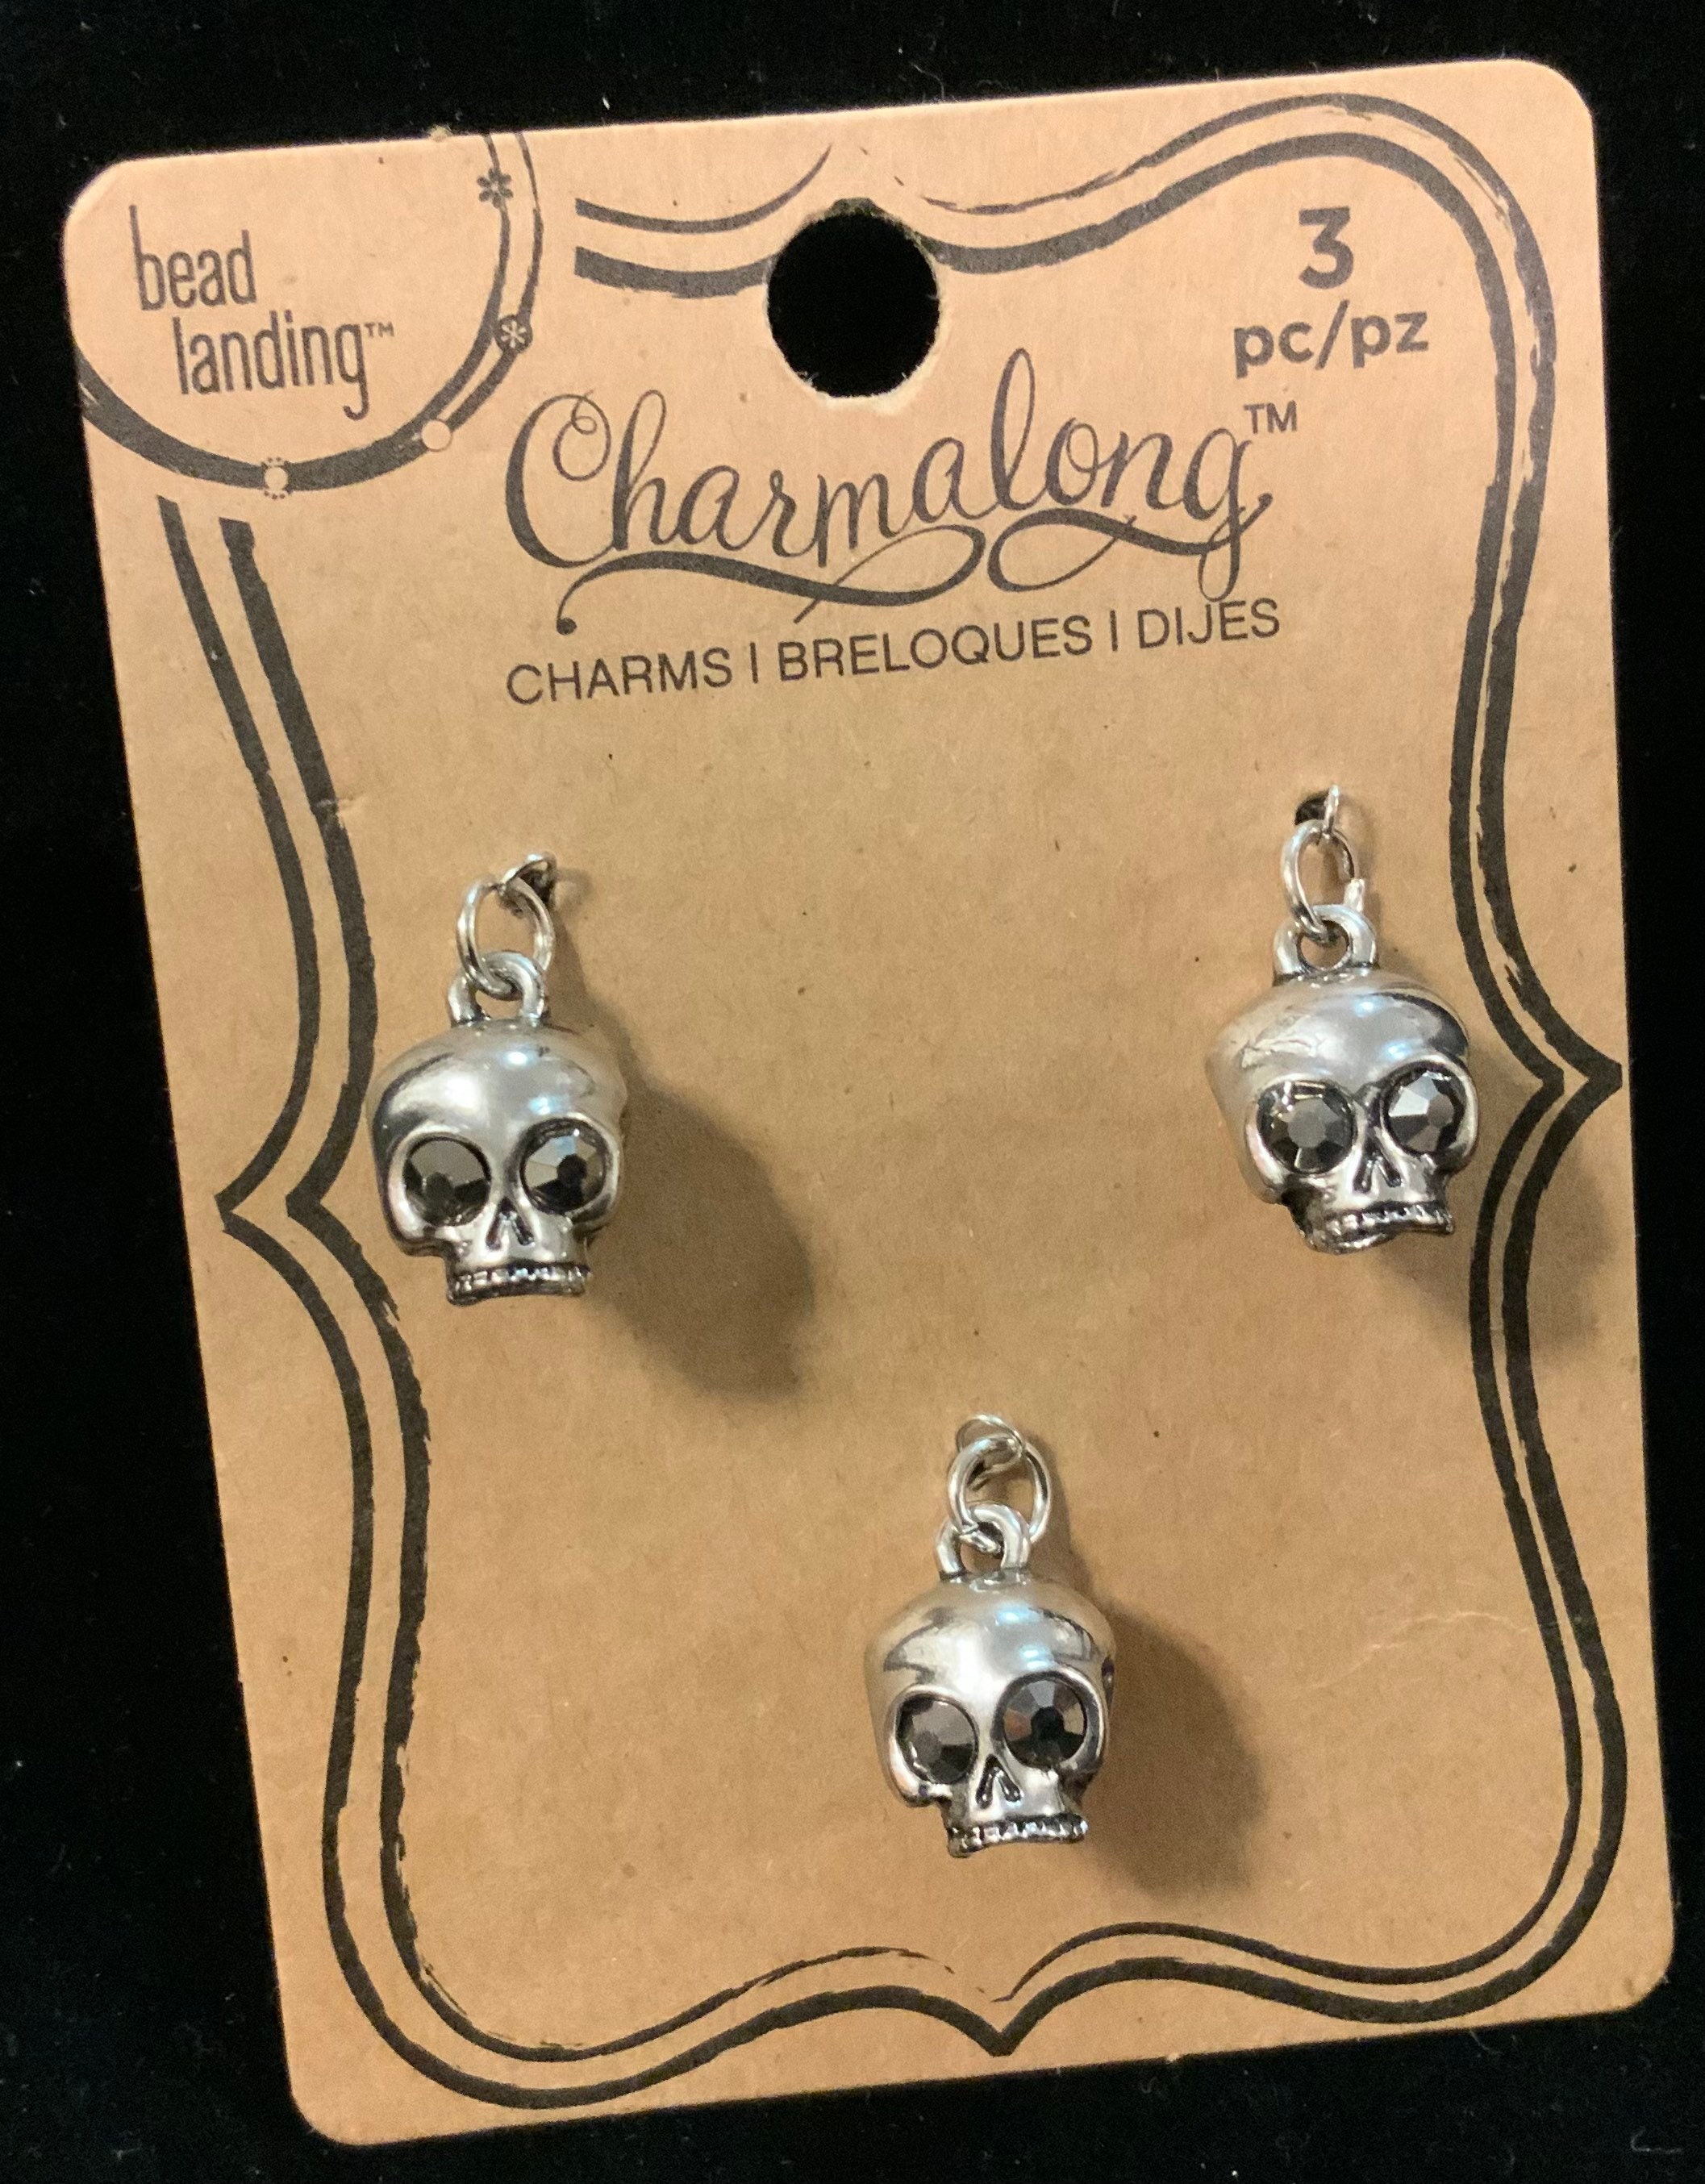 Bead Landing Charmalong Mini Crystal Charms - Each